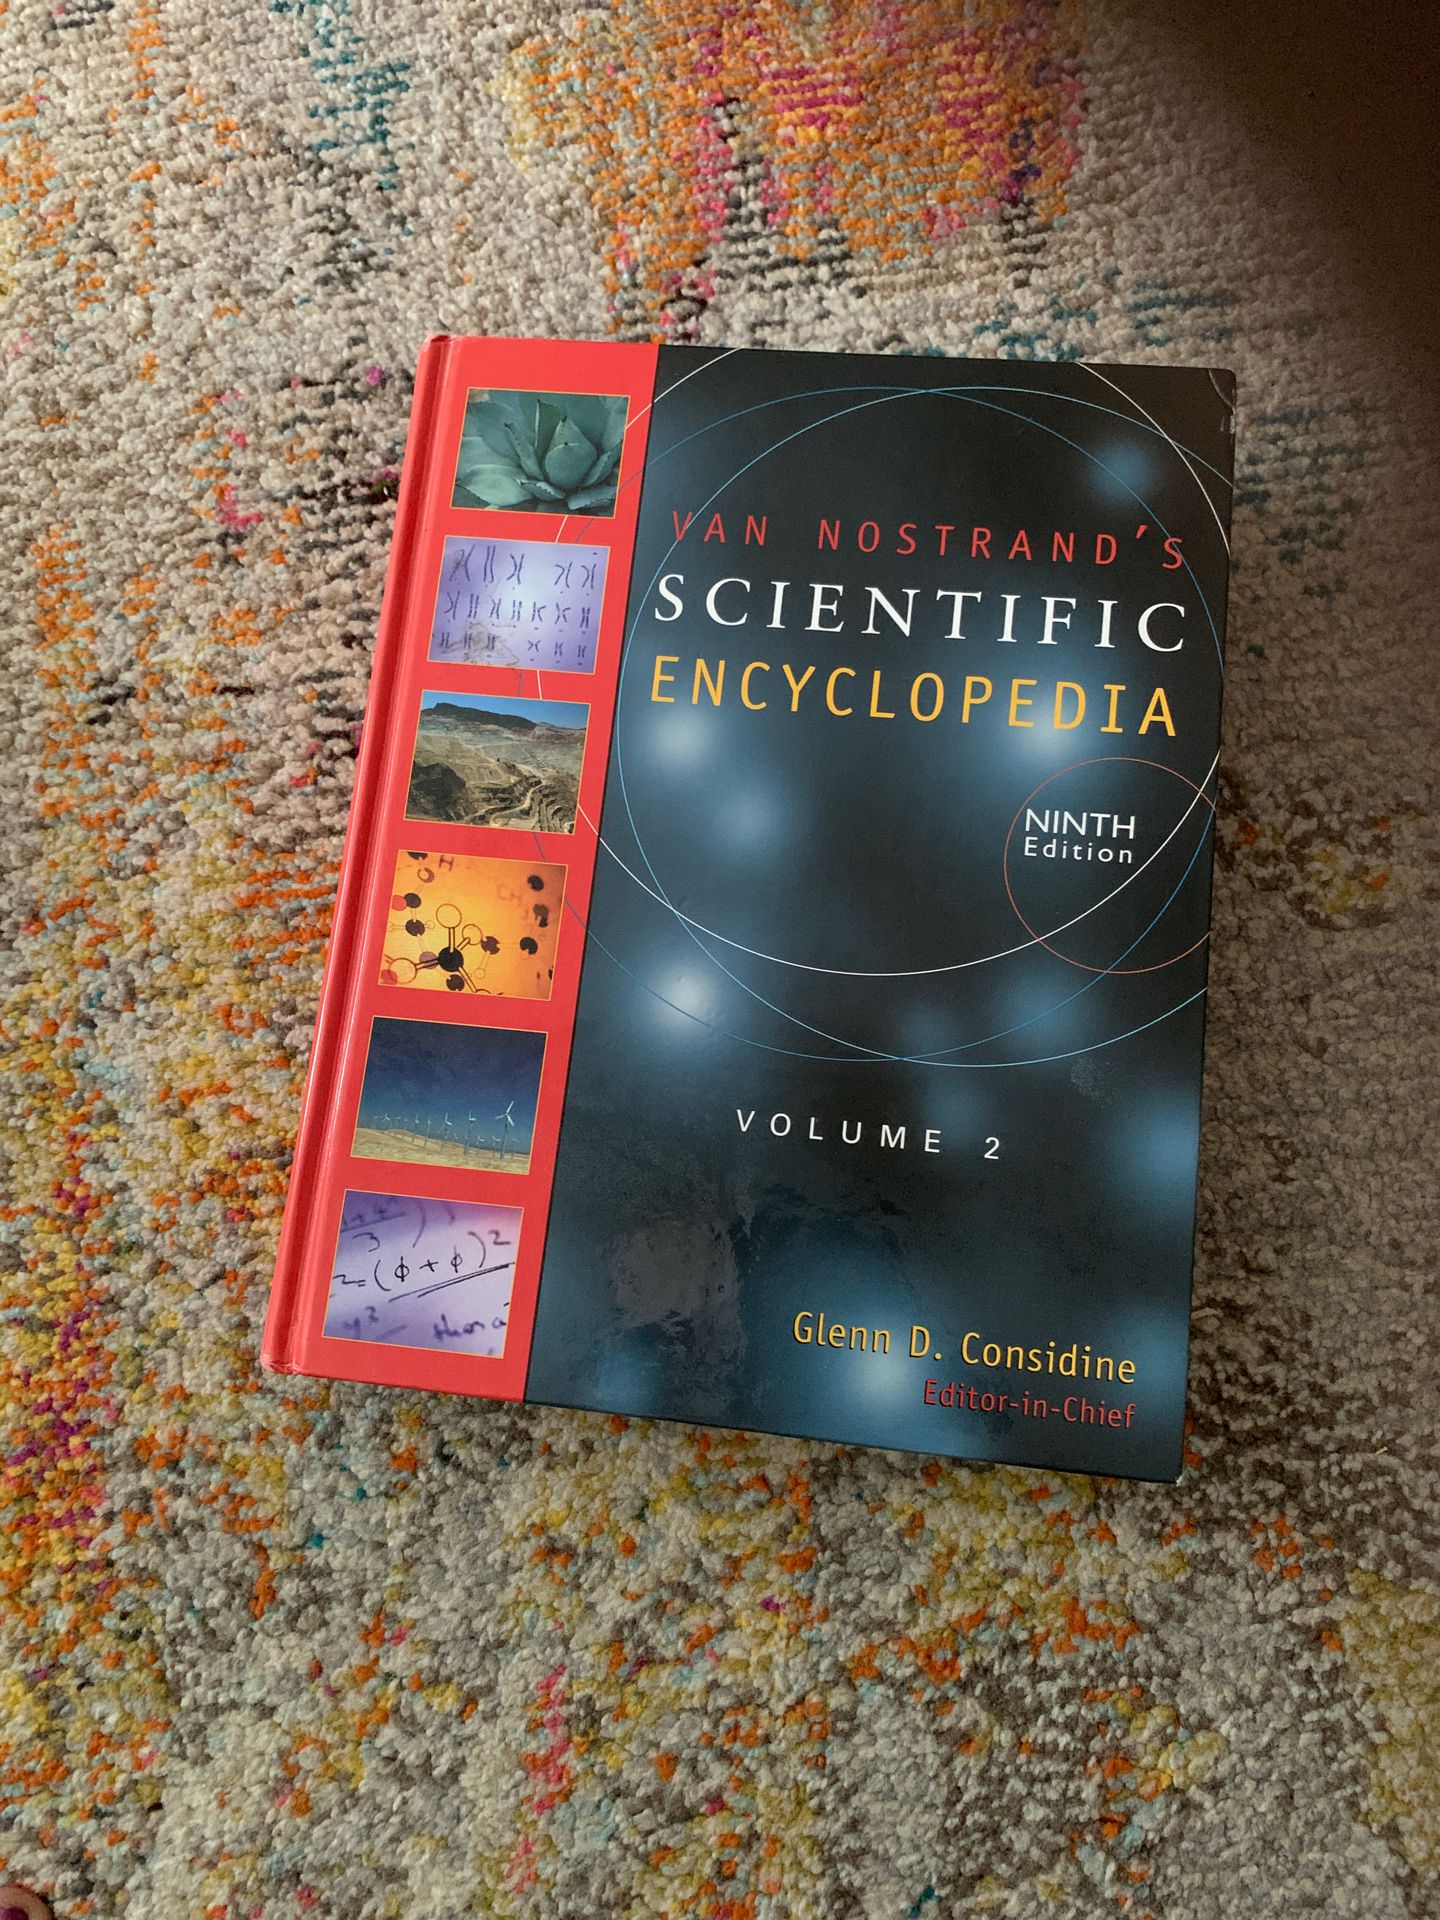 Van nostrand’s scientific Encyclopedia ninth edition volume 2